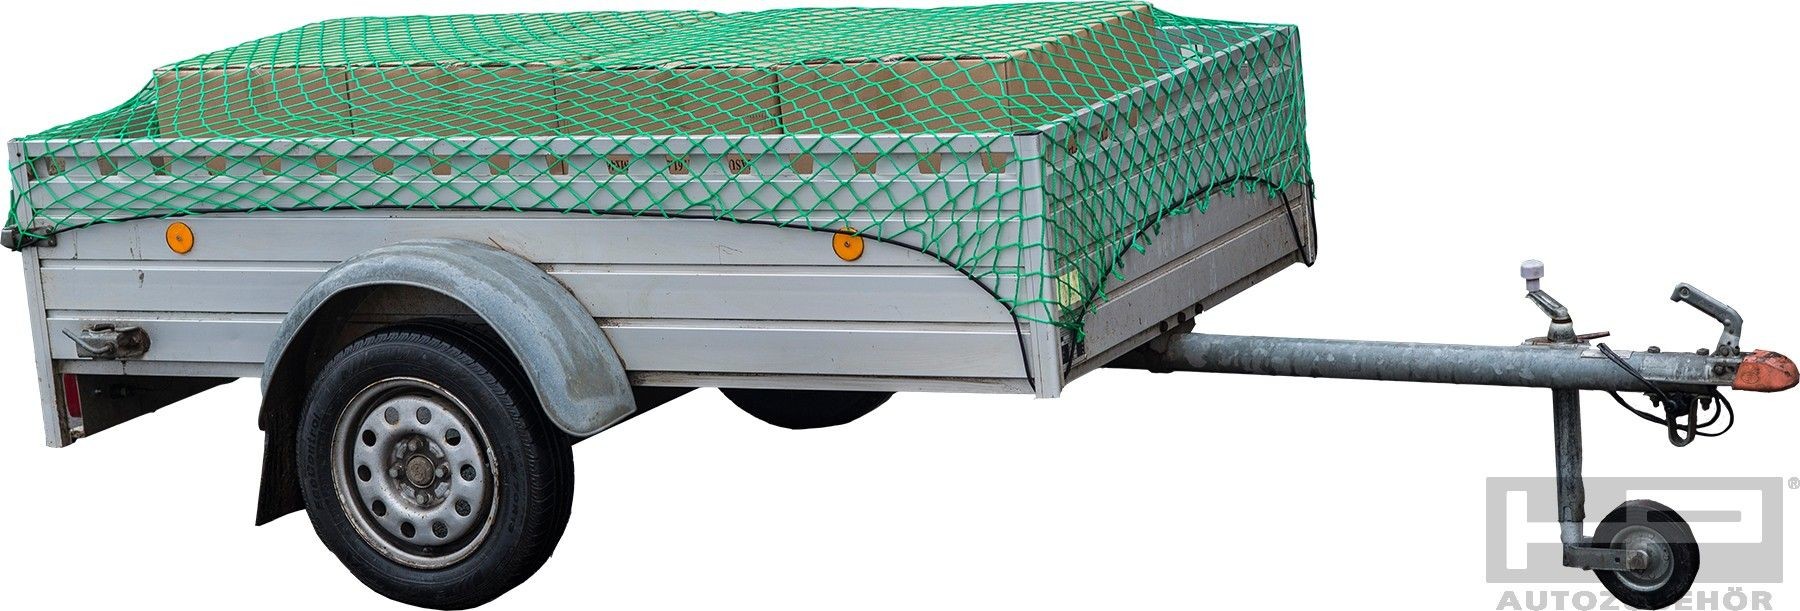 Trailer cargo net HPAUTO 25162